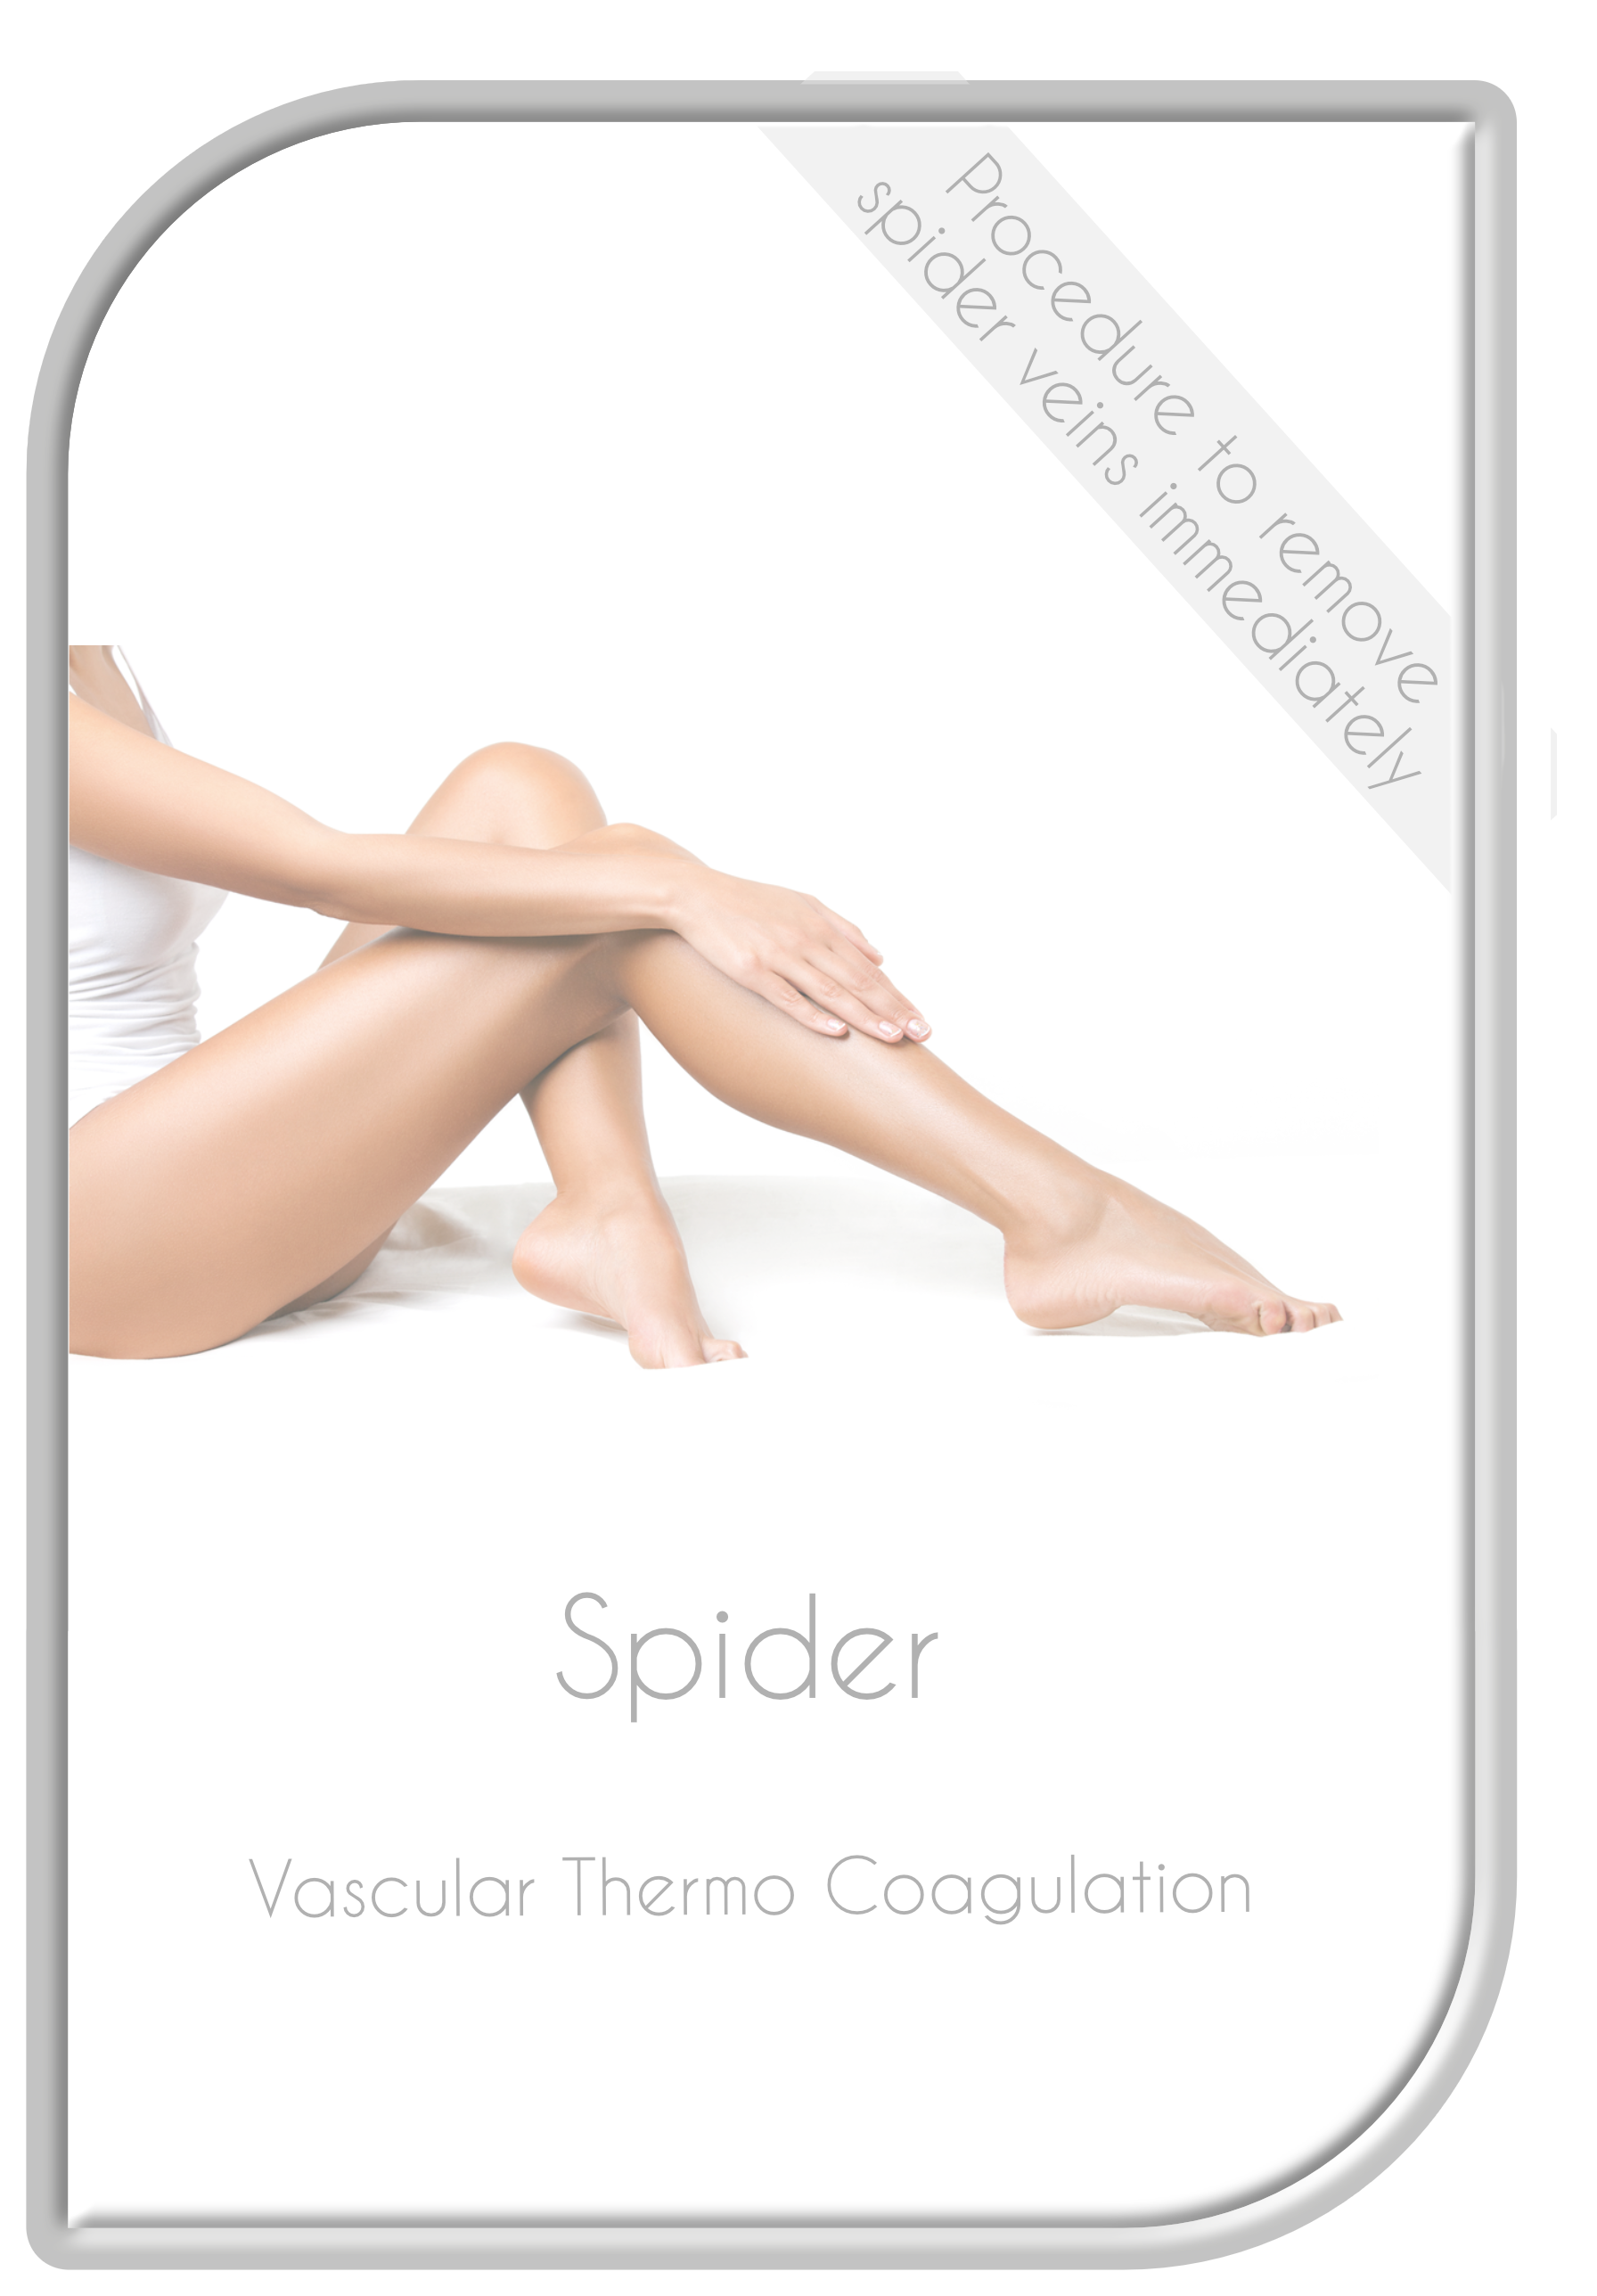 Vascular Thermo Coagulation - Spider™